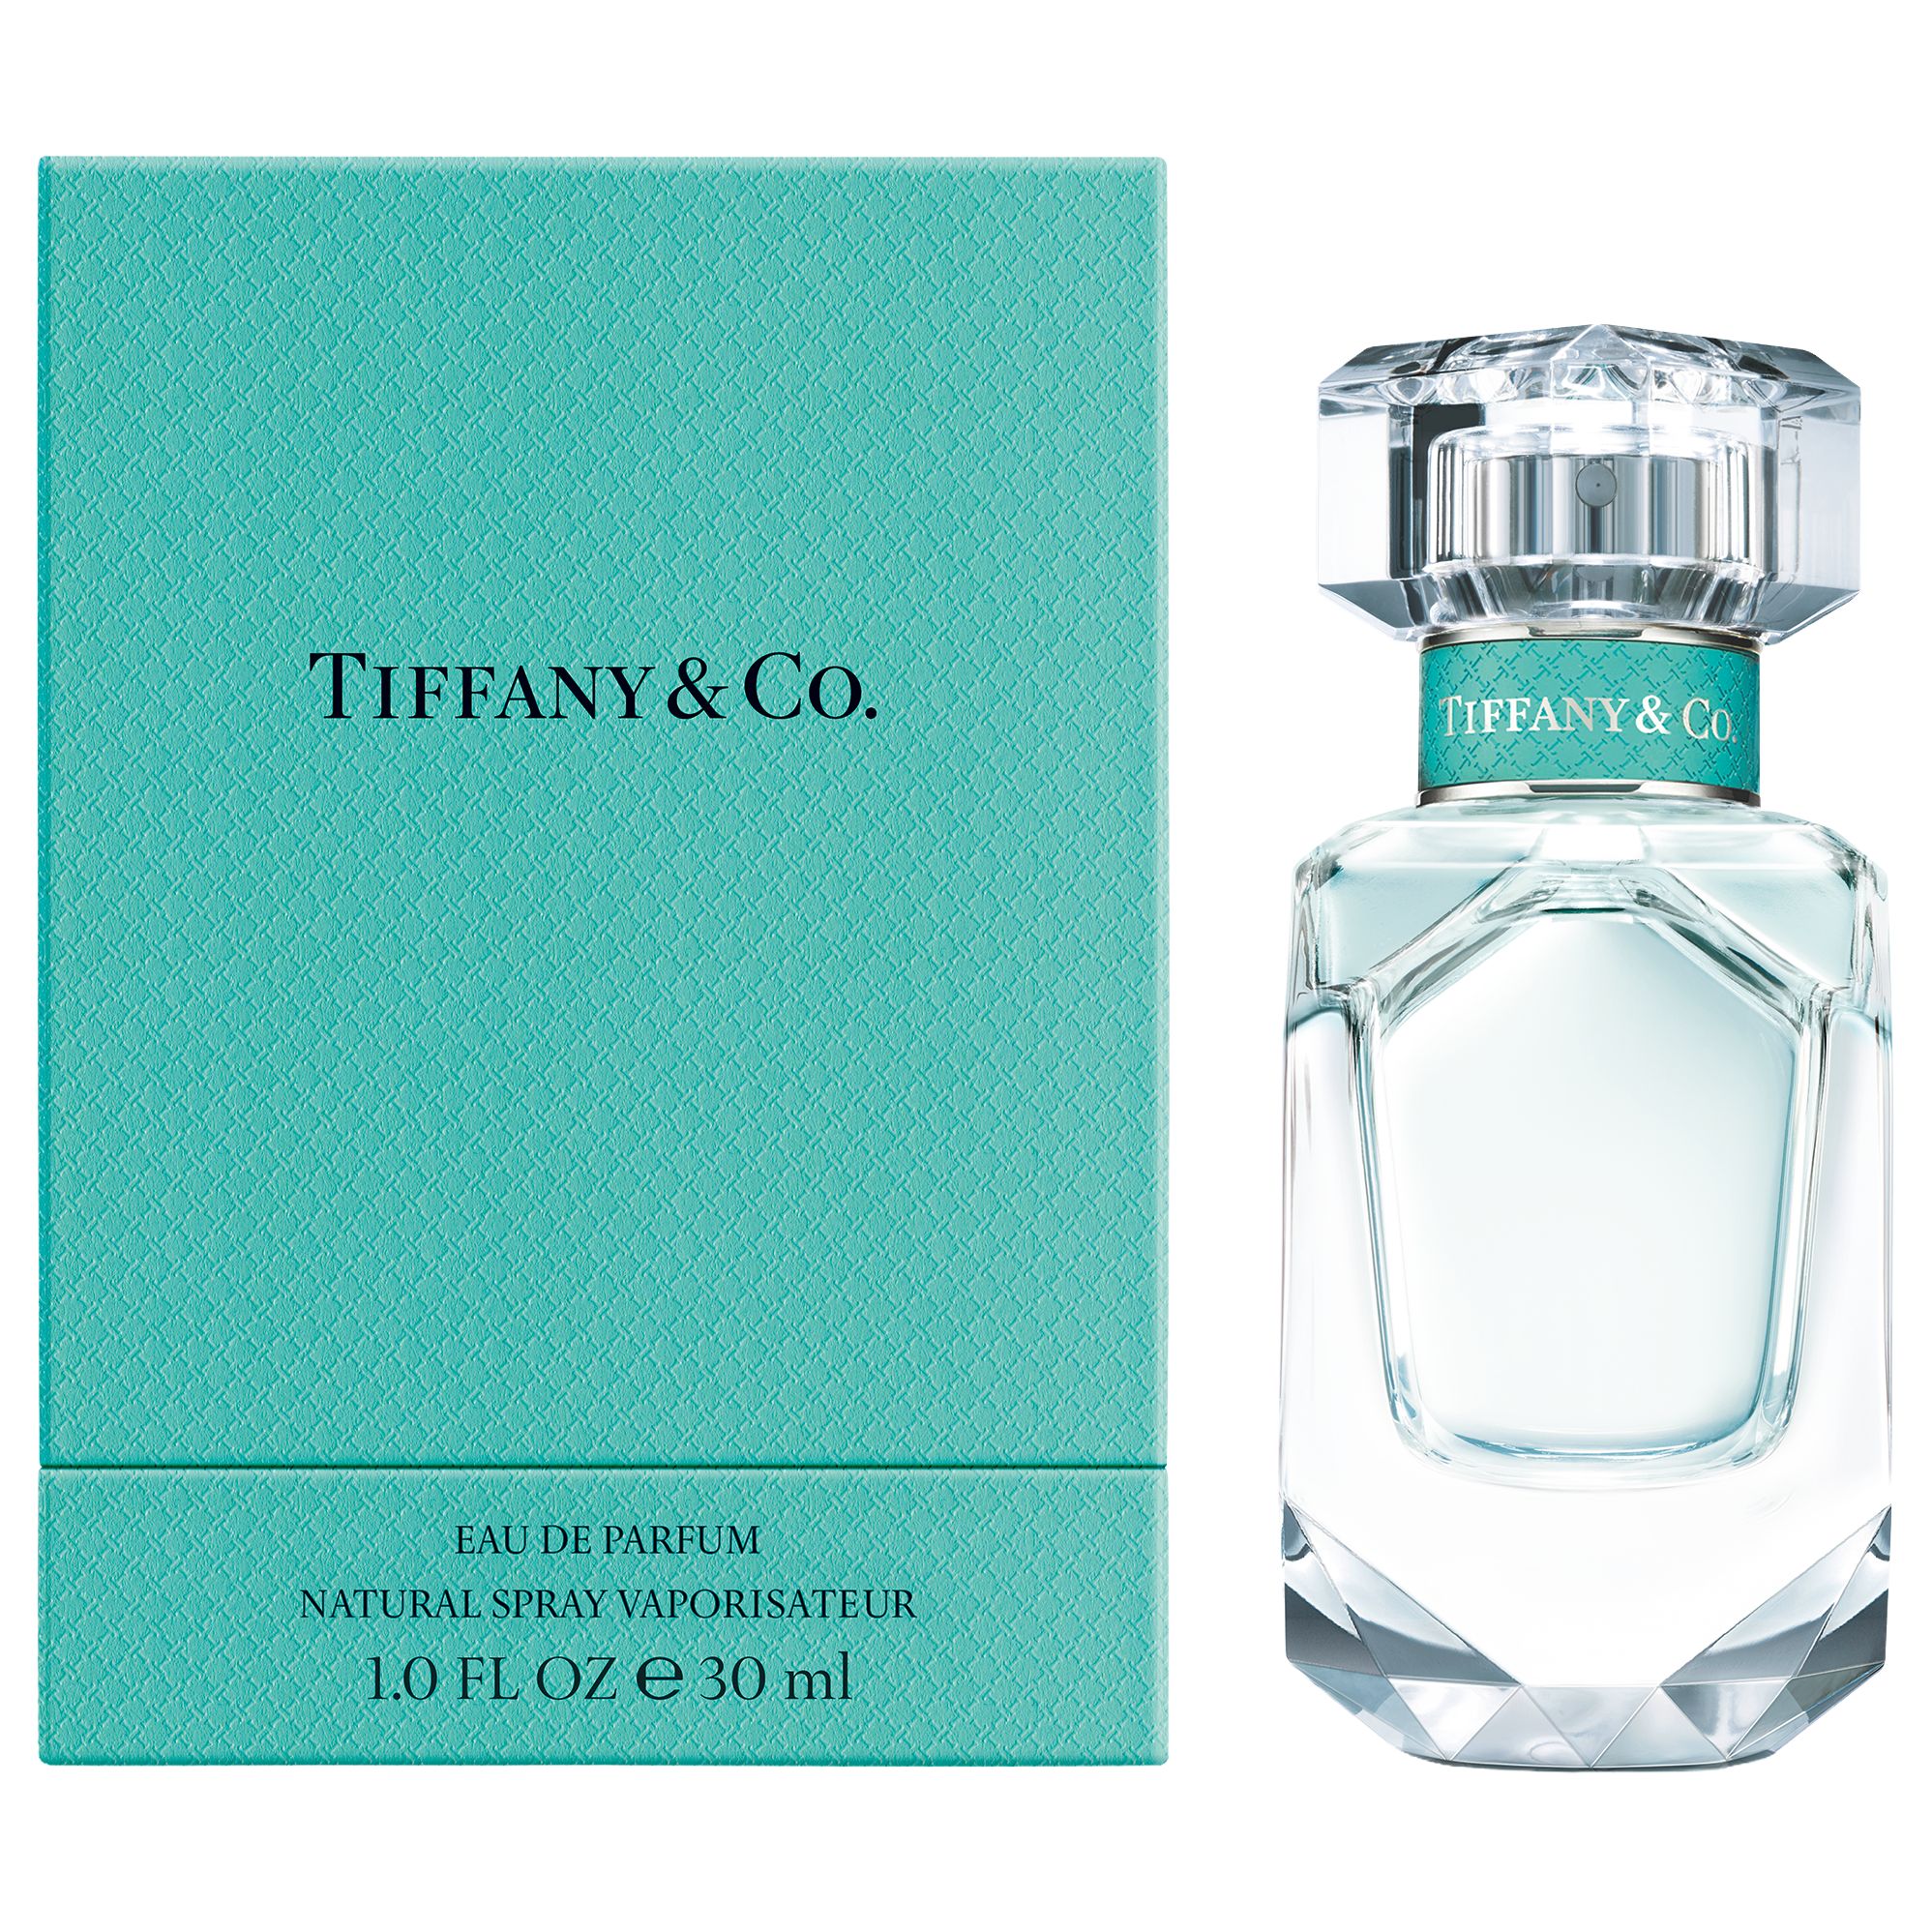 tiffany perfume 100ml